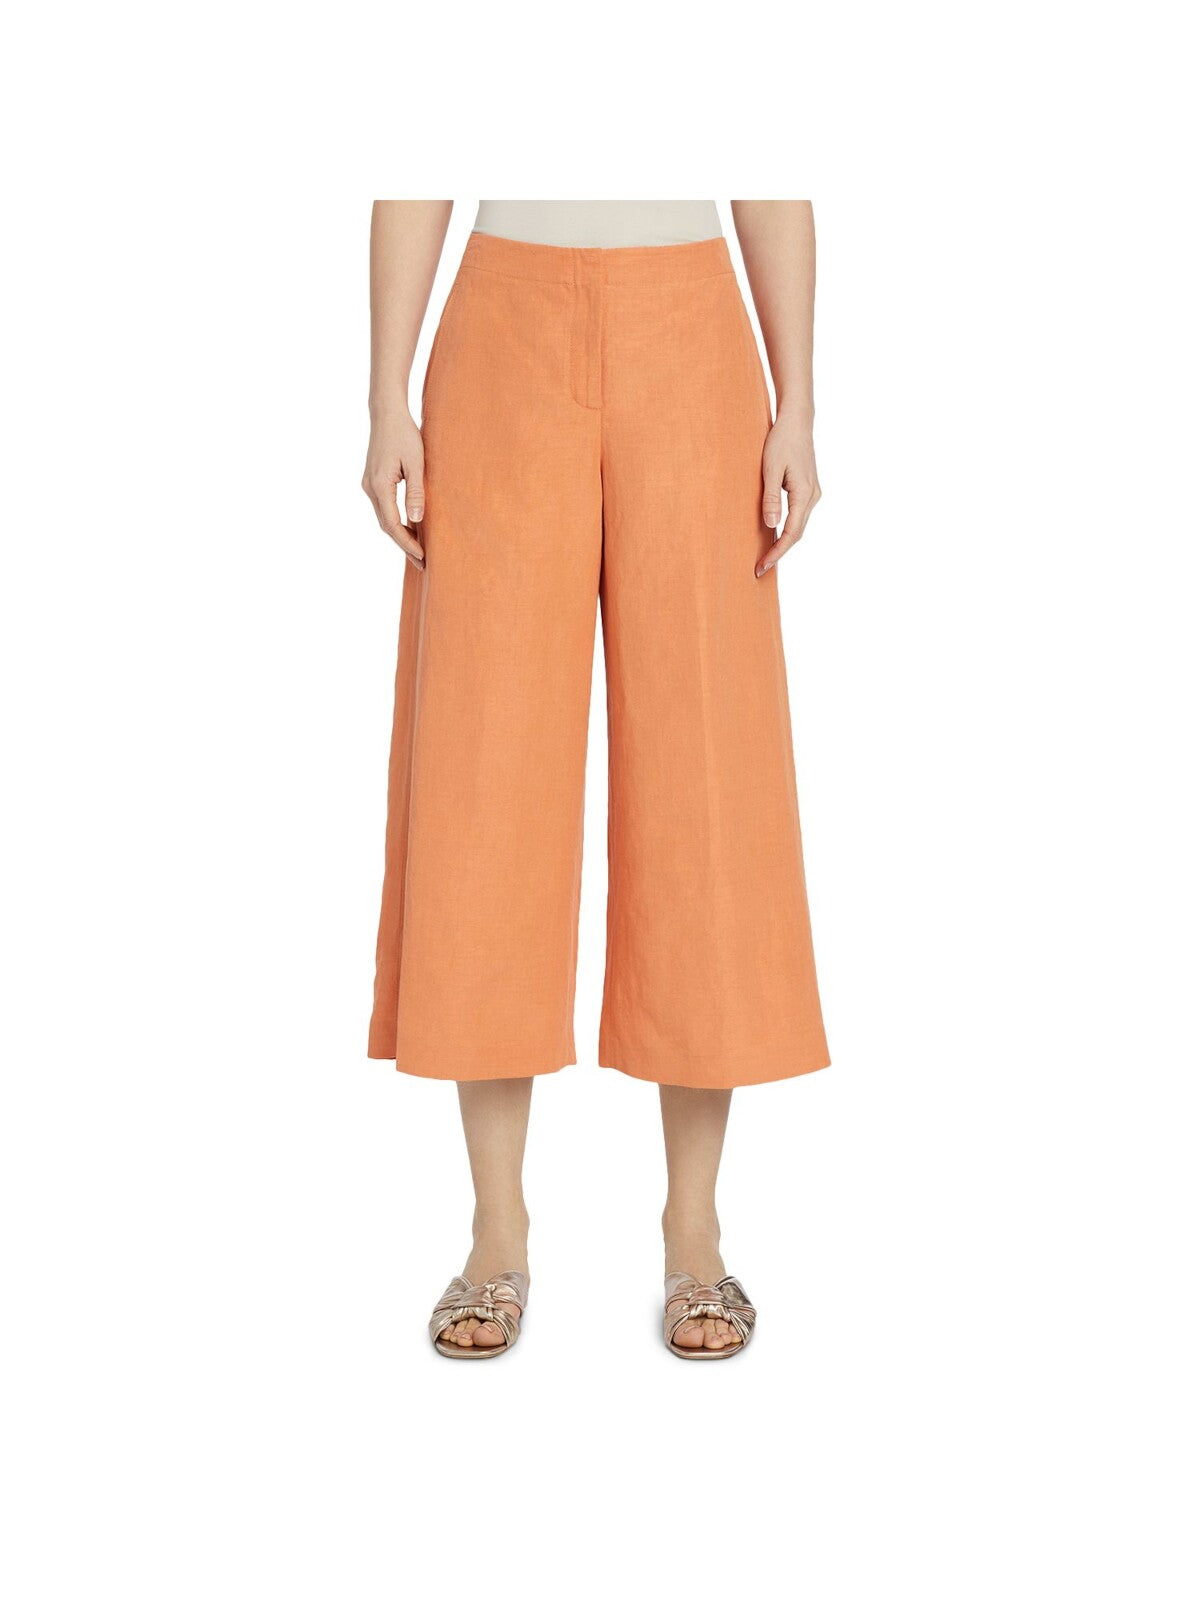 LAFAYETTE 148 Womens Orange Zippered Pocketed Wide Leg Capri High Waist Pants 10